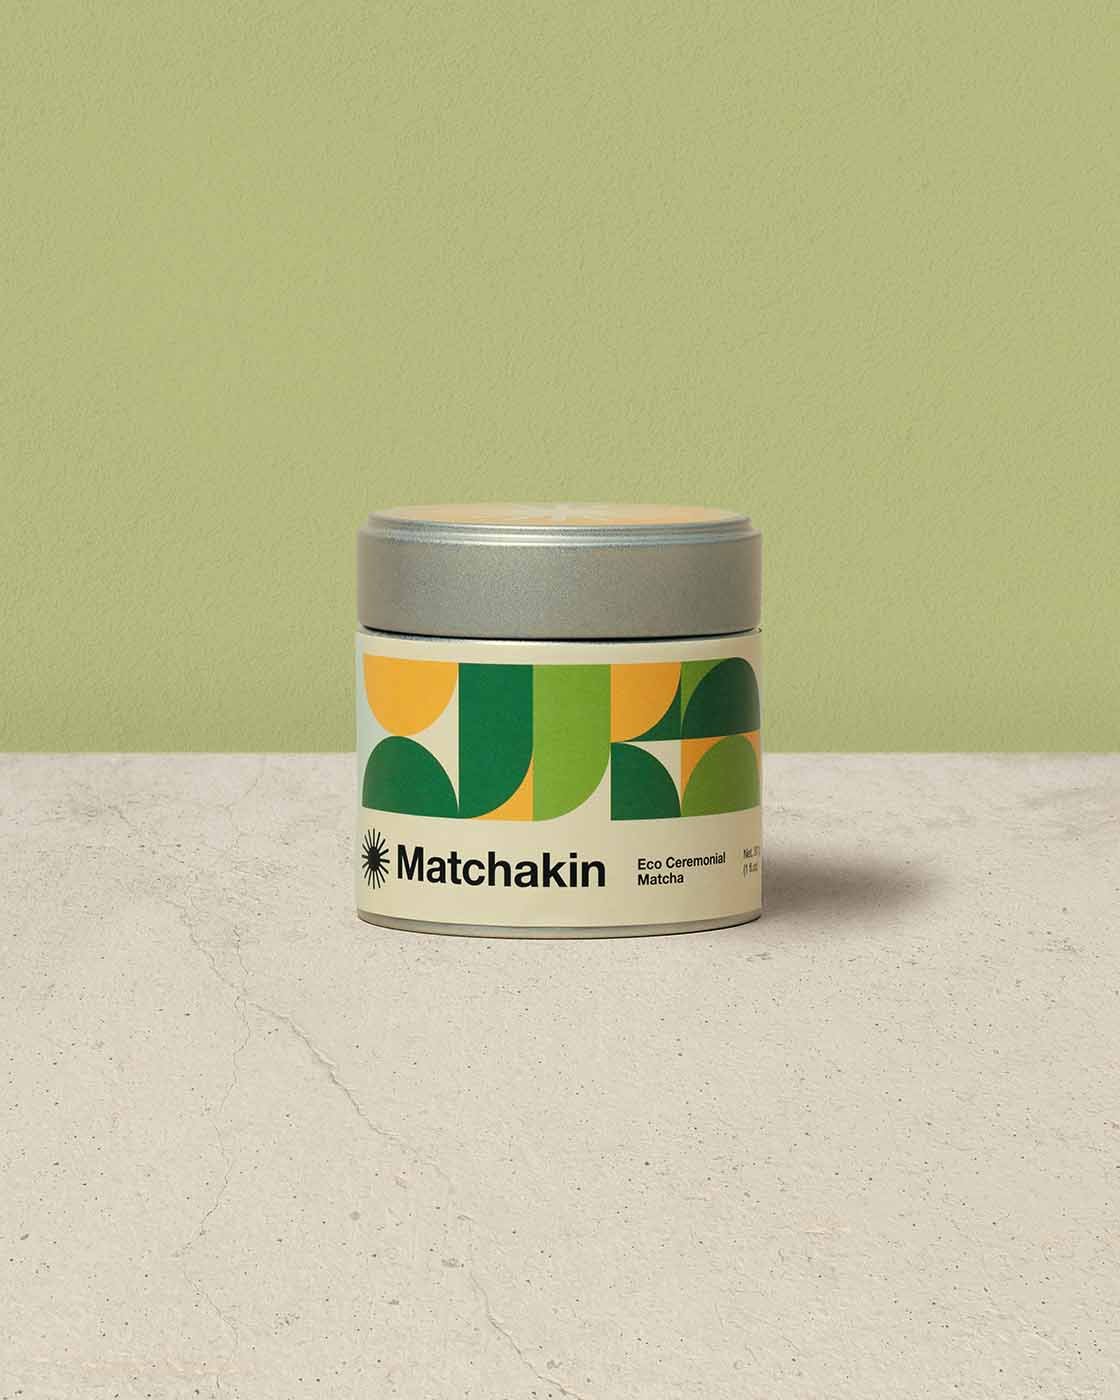 Matchakin Organic Eco Ceremonial Matcha green tea powder made in Japan